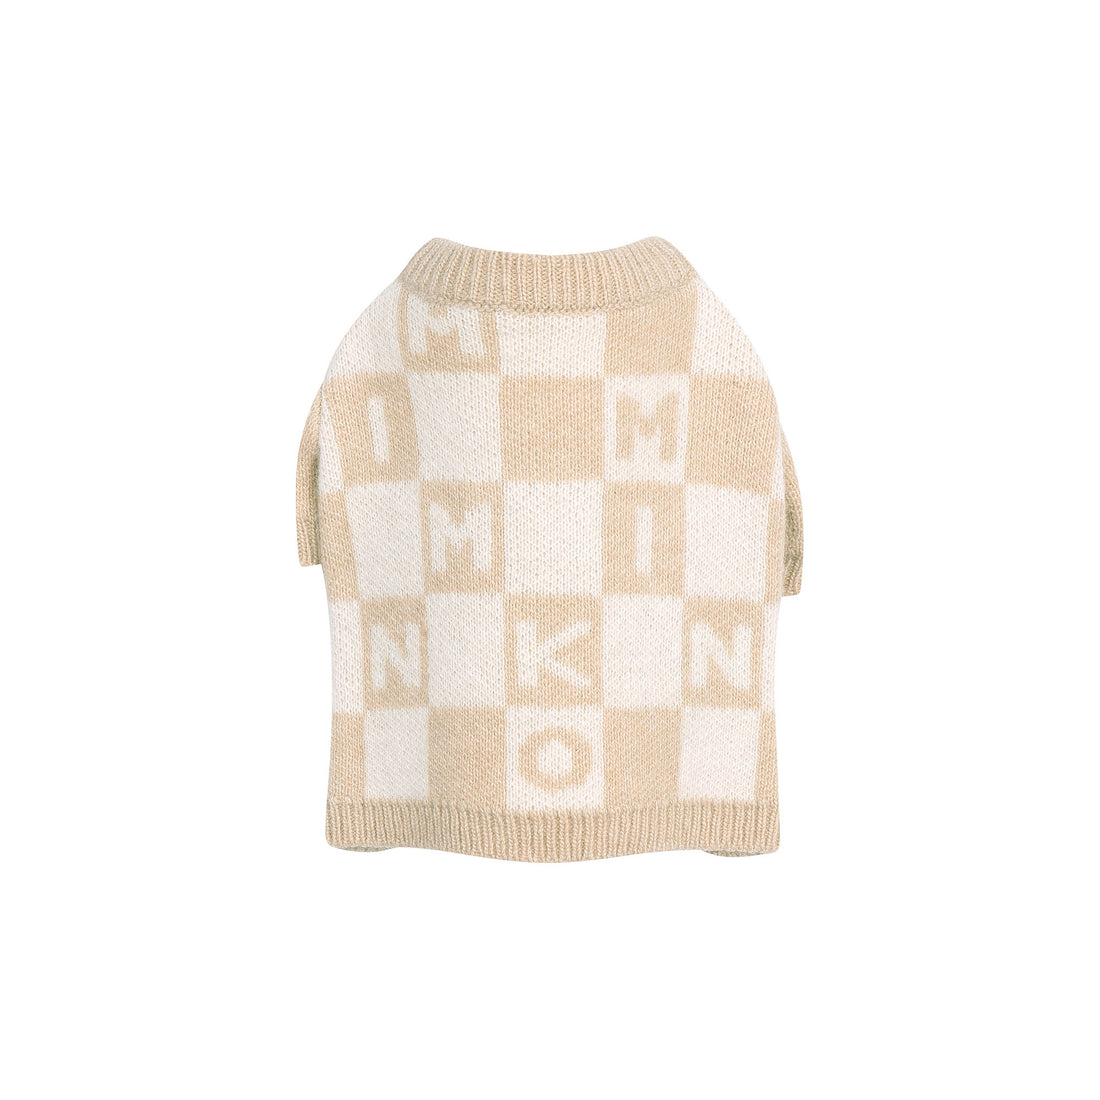 Miminko Checkered Sweater - Beige